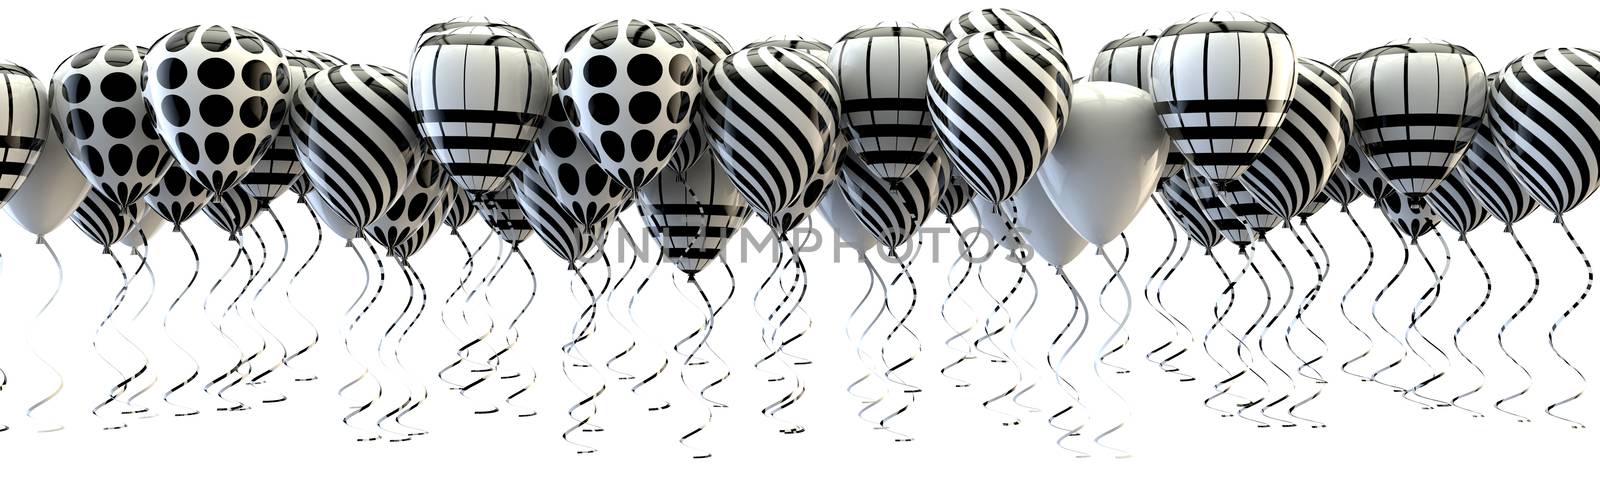 Balloons vintage party style. by carloscastilla